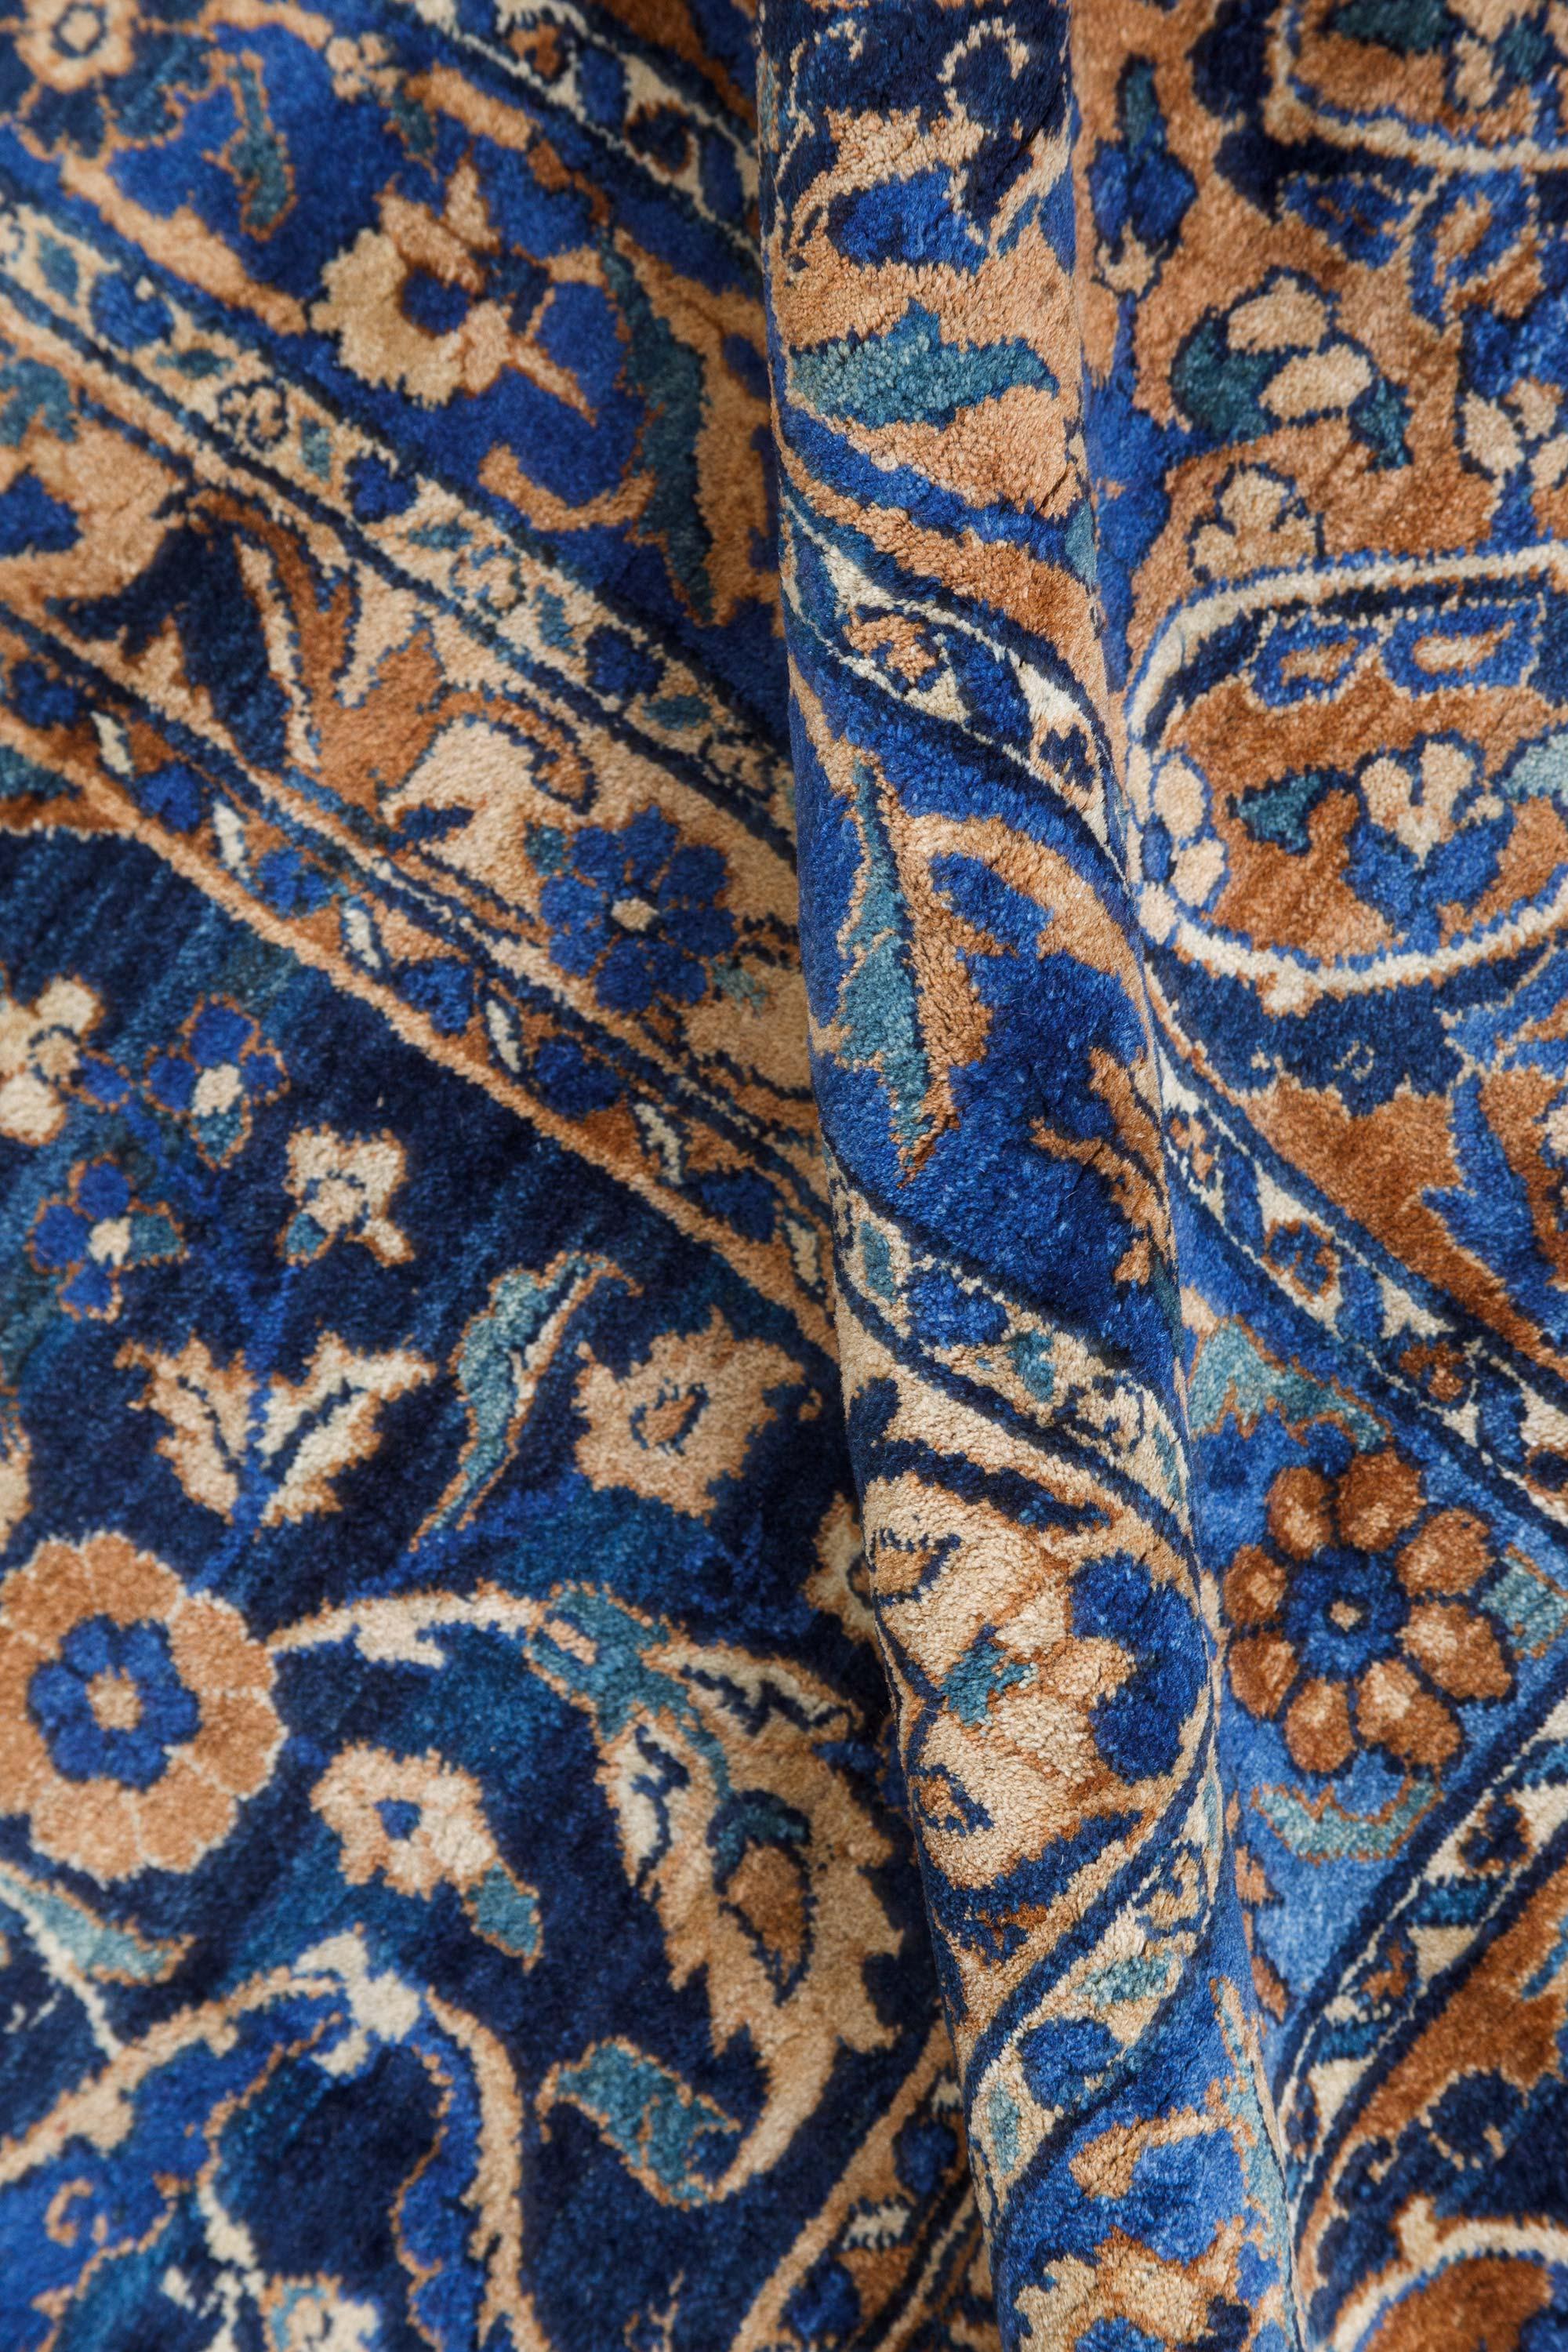 Authentic Persian Kirman handmade wool rug
Size: 10'10